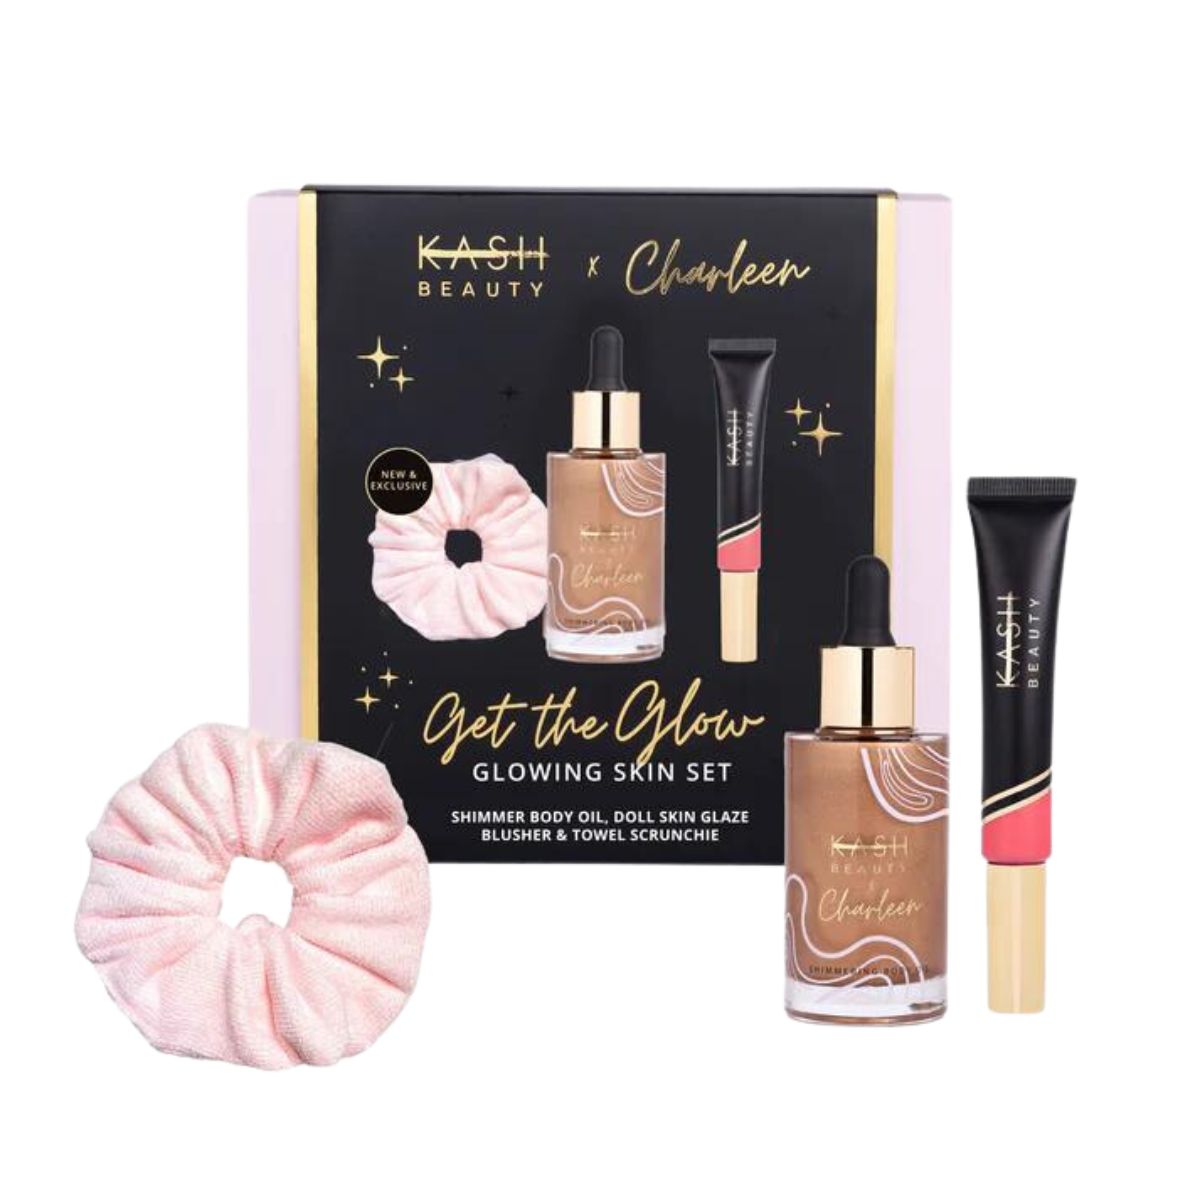 Kash Beauty Charleen - Get The Glow Glowing Skin Set